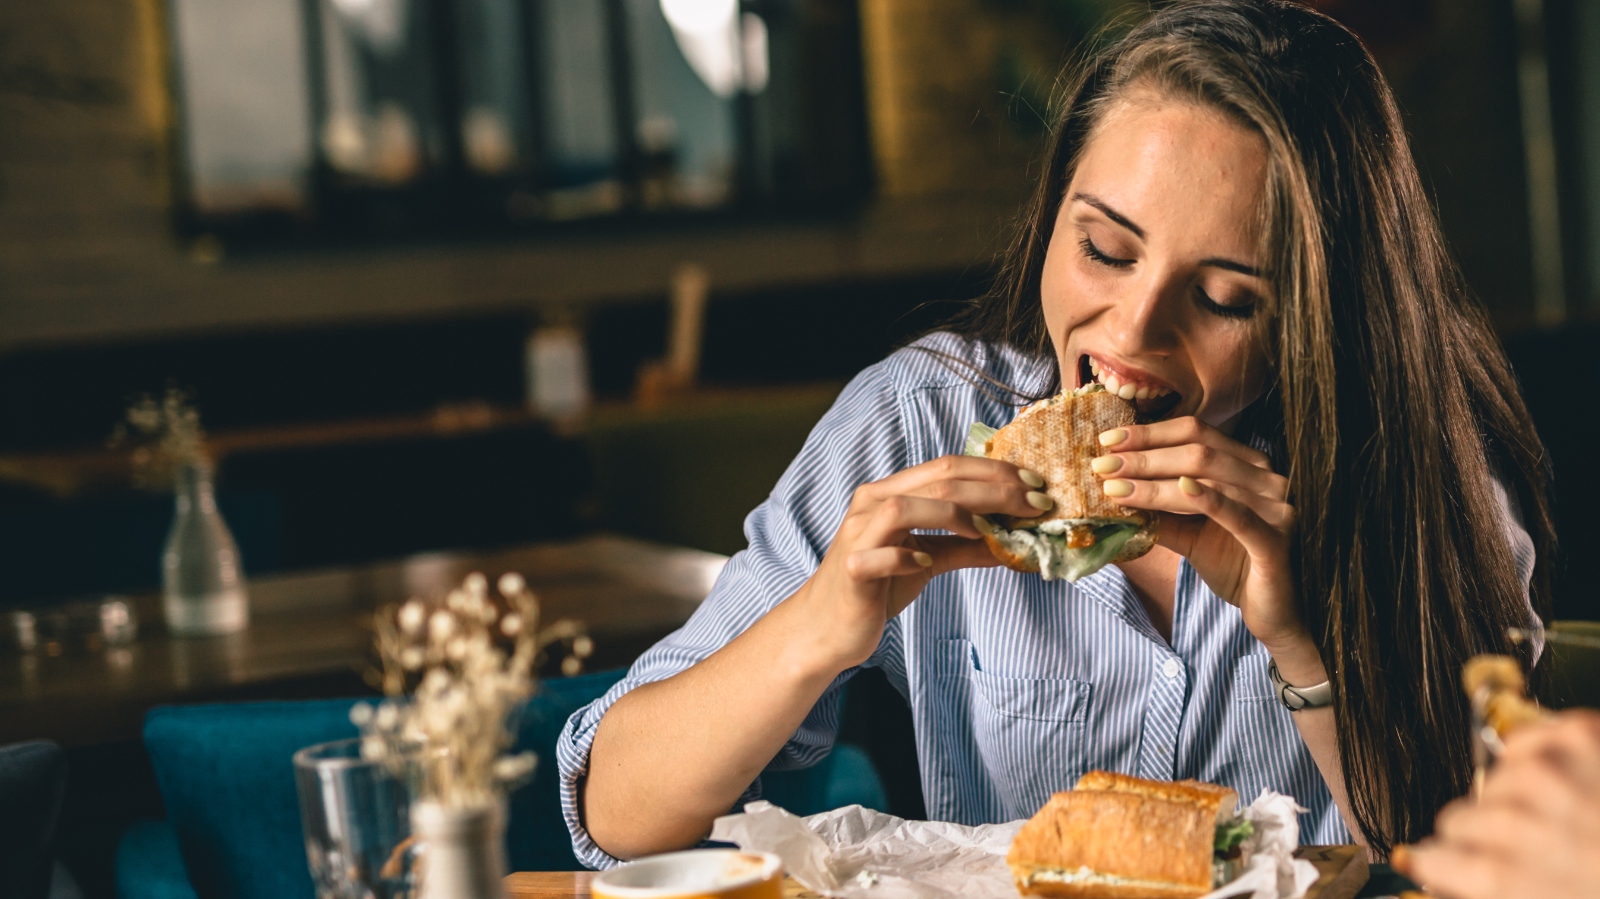 A woman eating a sandwich at a restaurant